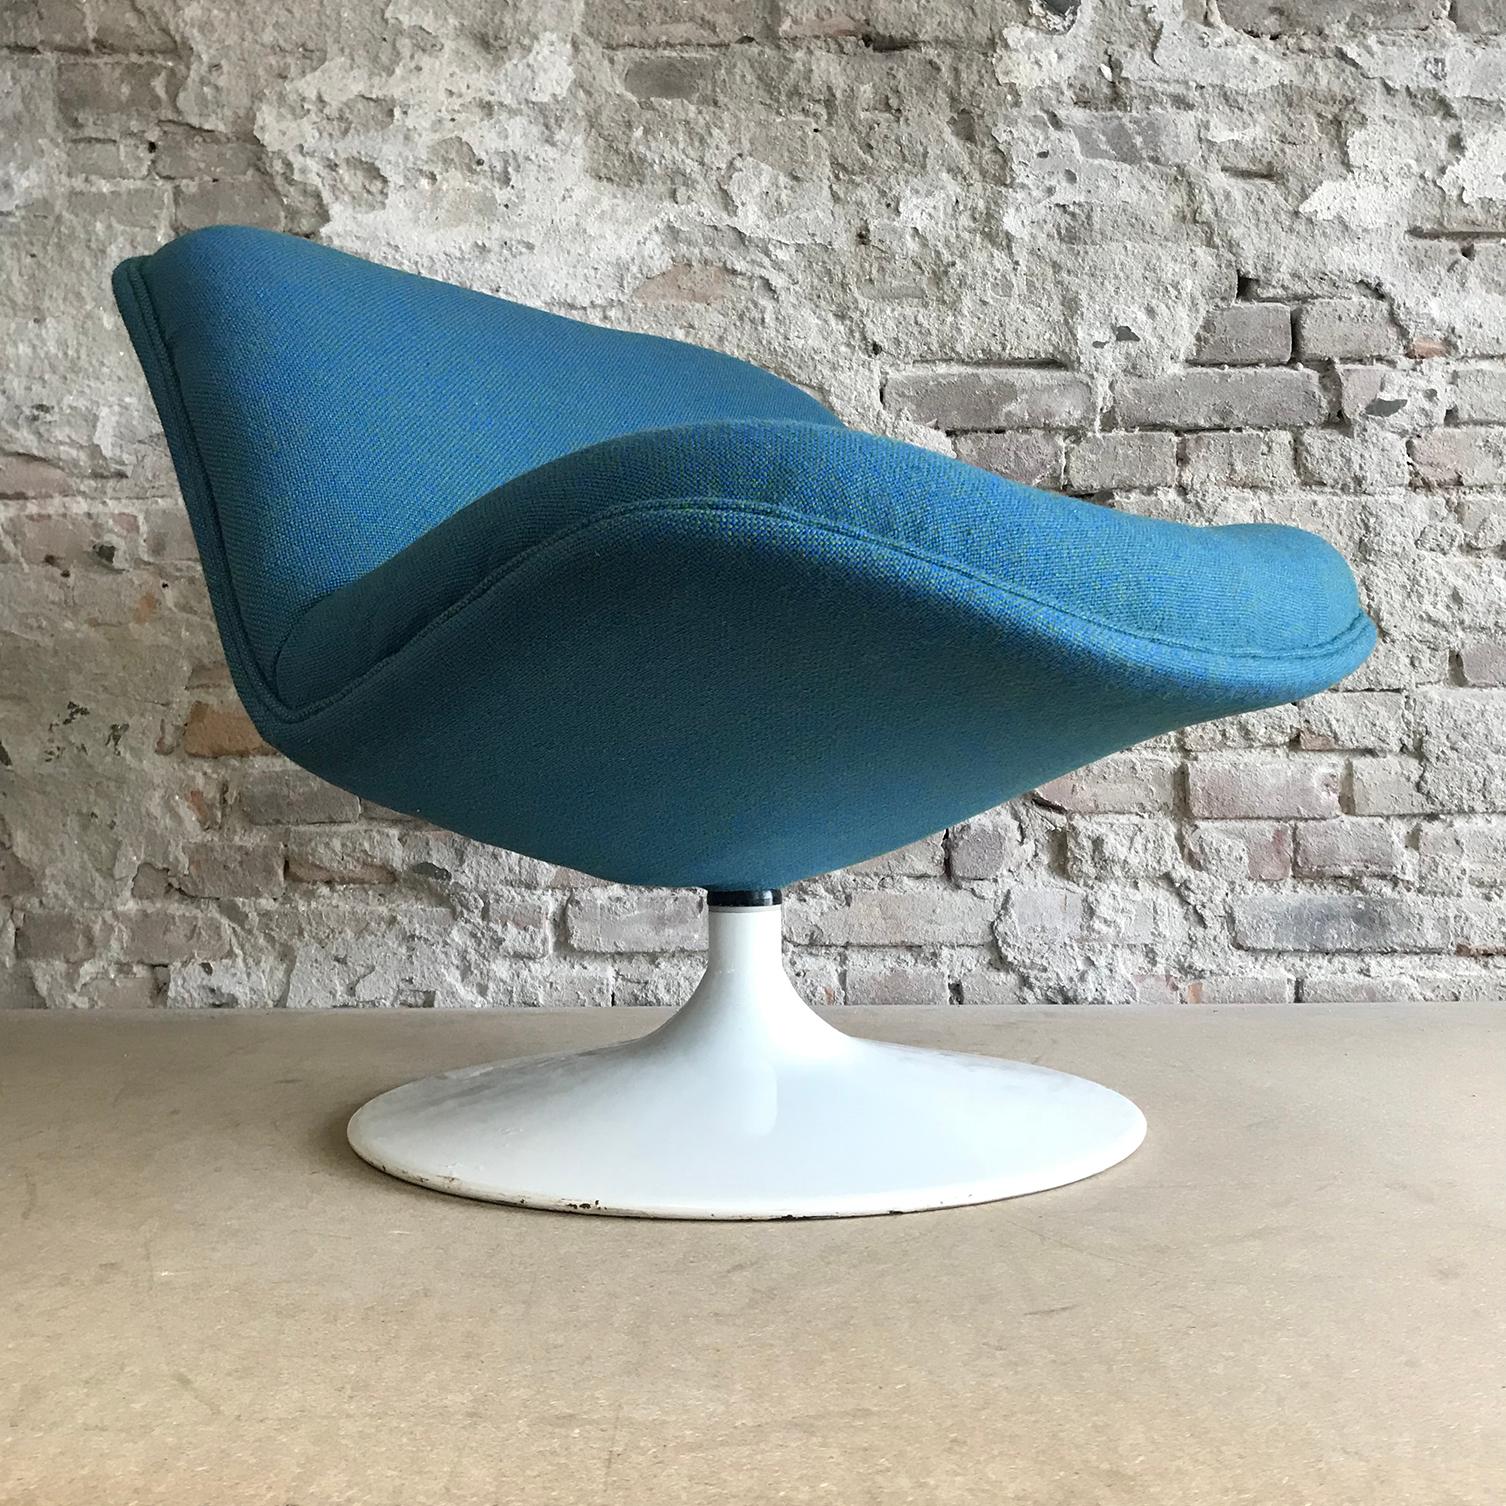 Mid-Century Modern 1977, Geoffrey Harcourt, Artifort 508 Chair by New Upholstery Blue Green Fabric